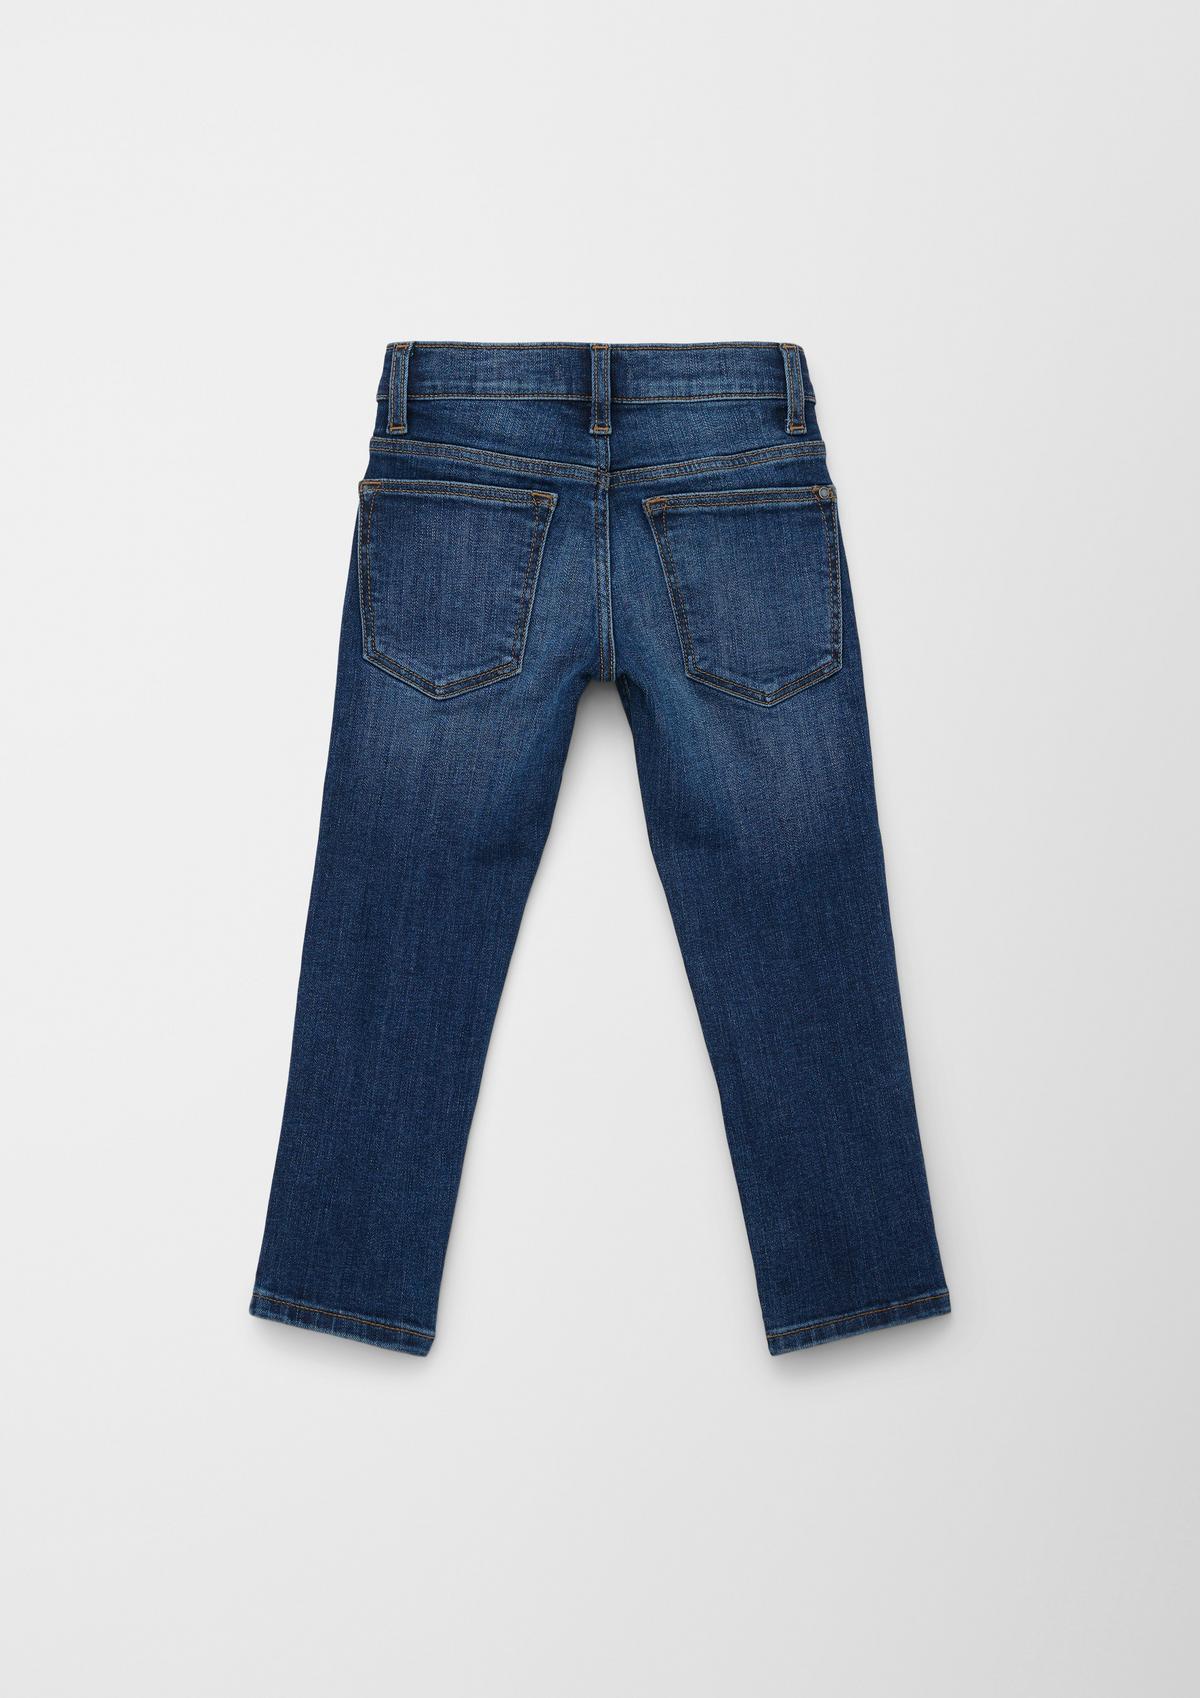 s.Oliver Brad jeans / slim fit / mid rise / slim leg